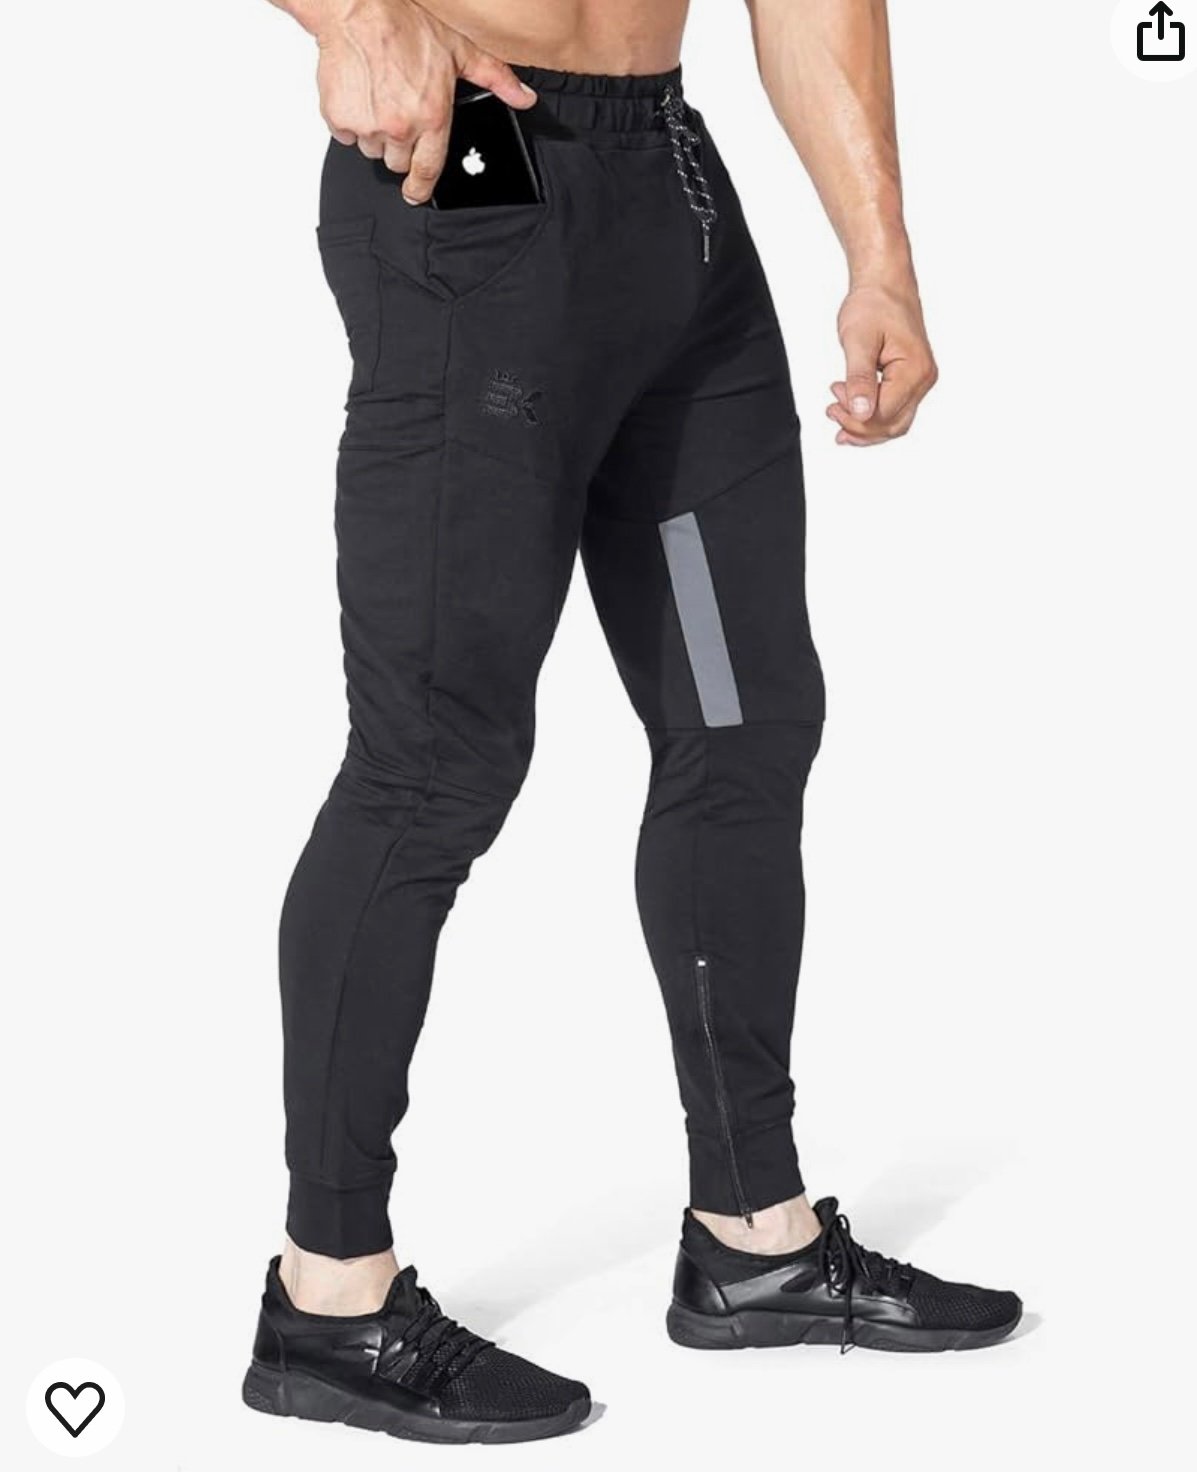 Mens Gym Jogger Pants, Casual Slim Workout Sweatpants with Zipper Pockets m3S4riv7j